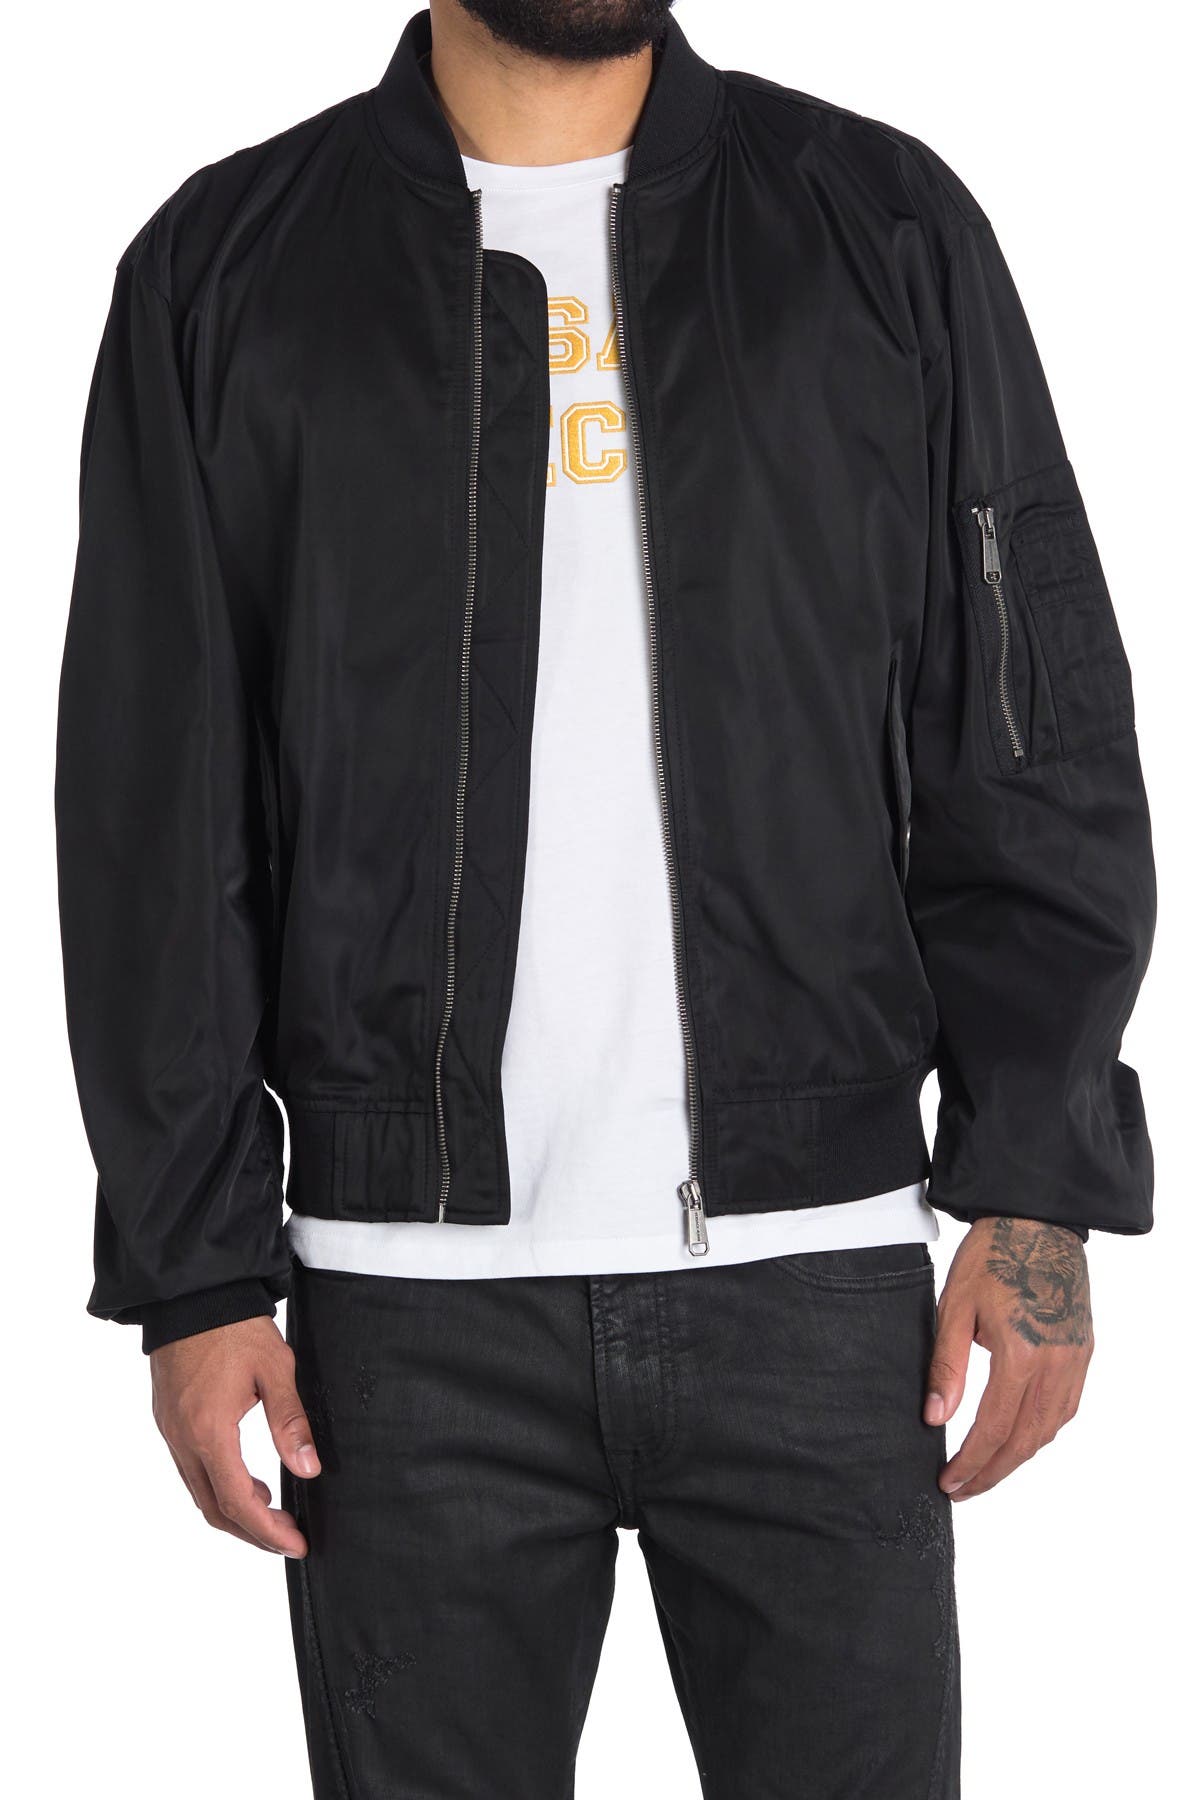 versace bomber jacket black